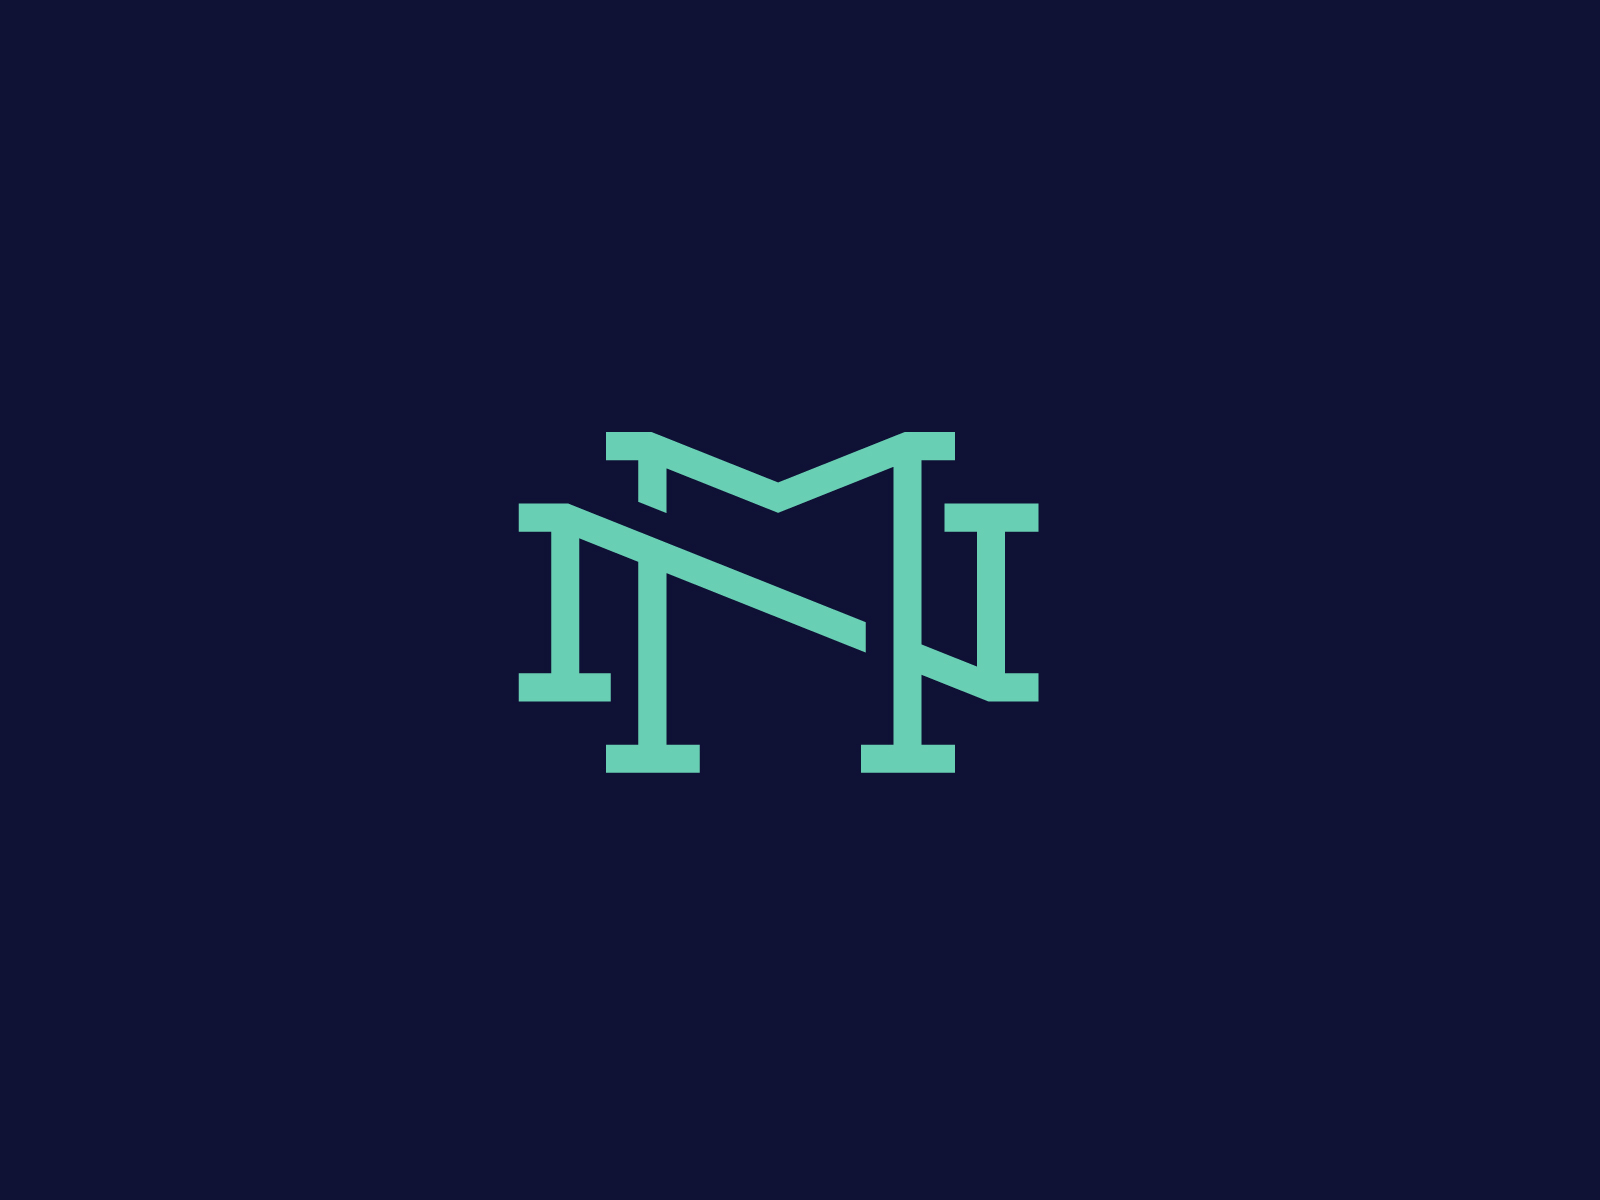 MN / NM Monogram logo by Bakari Mkambo on Dribbble